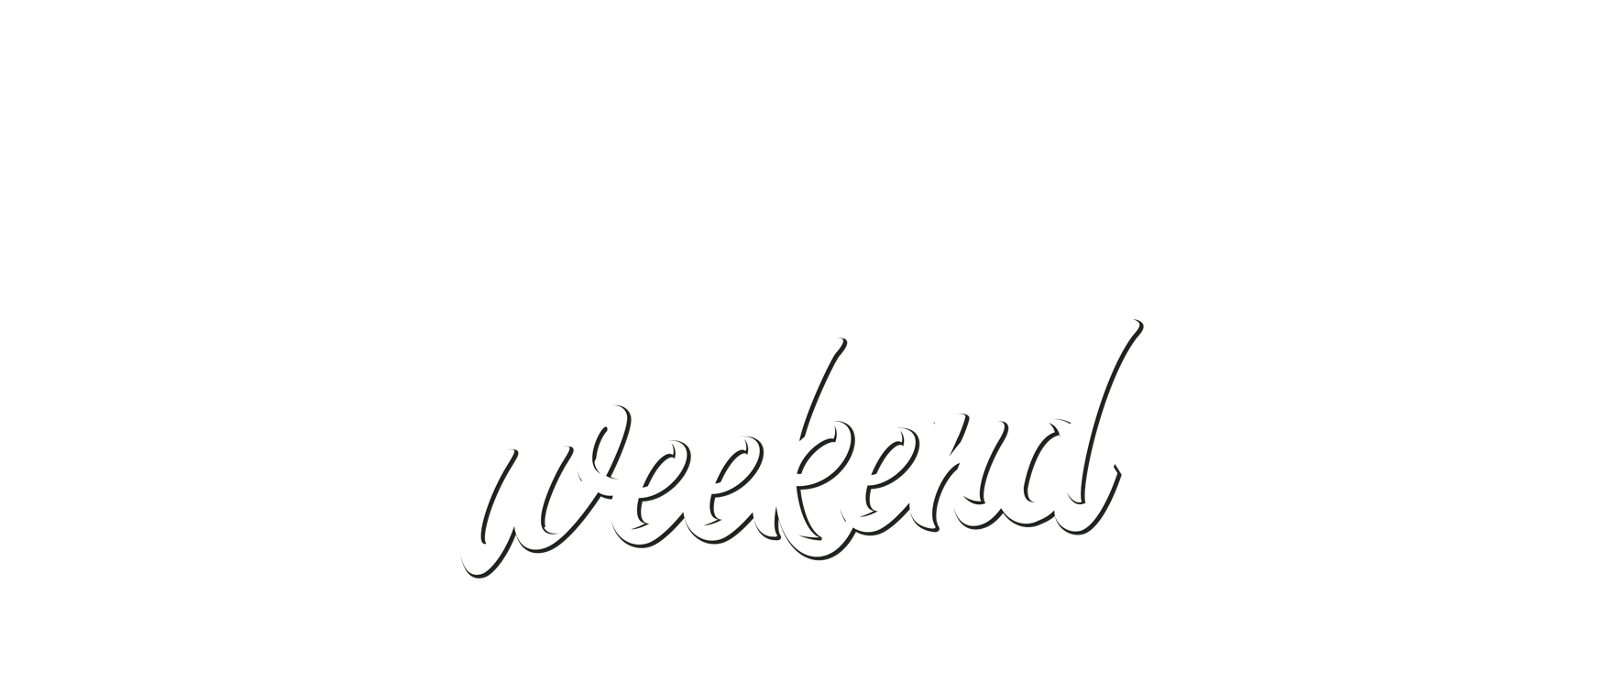 Black Weekend - Altaplaza Mall Panamá